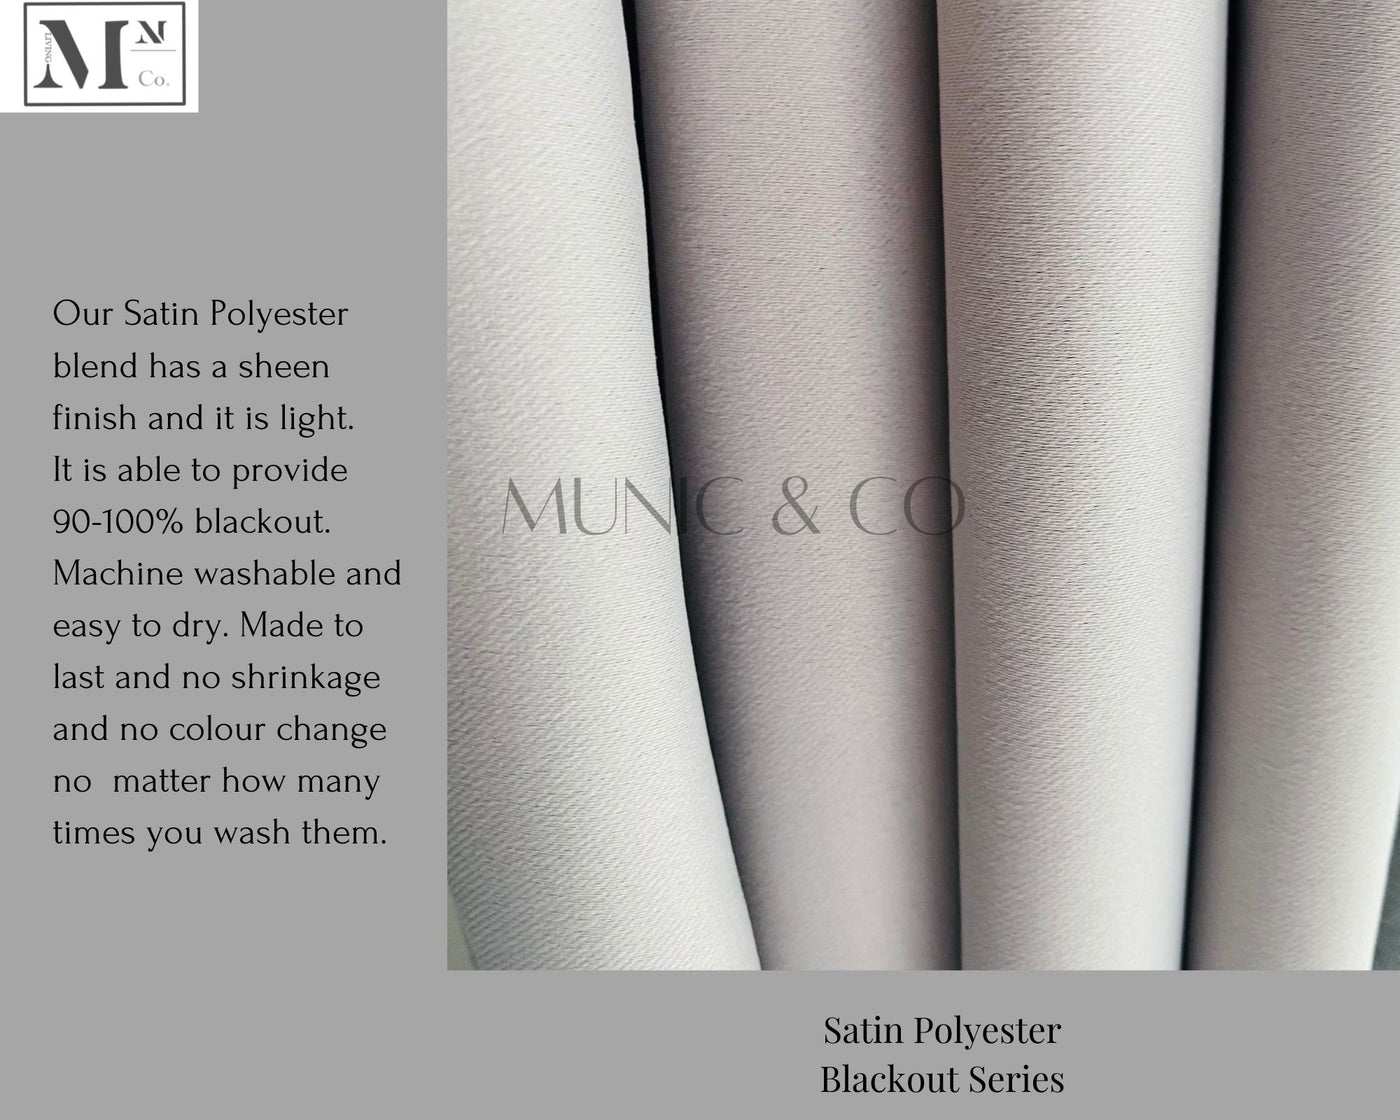 kenzi 90-100% blackout curtains.  sateen polyester night curtains. diy made-to-measure blackout curtains in 12 days!